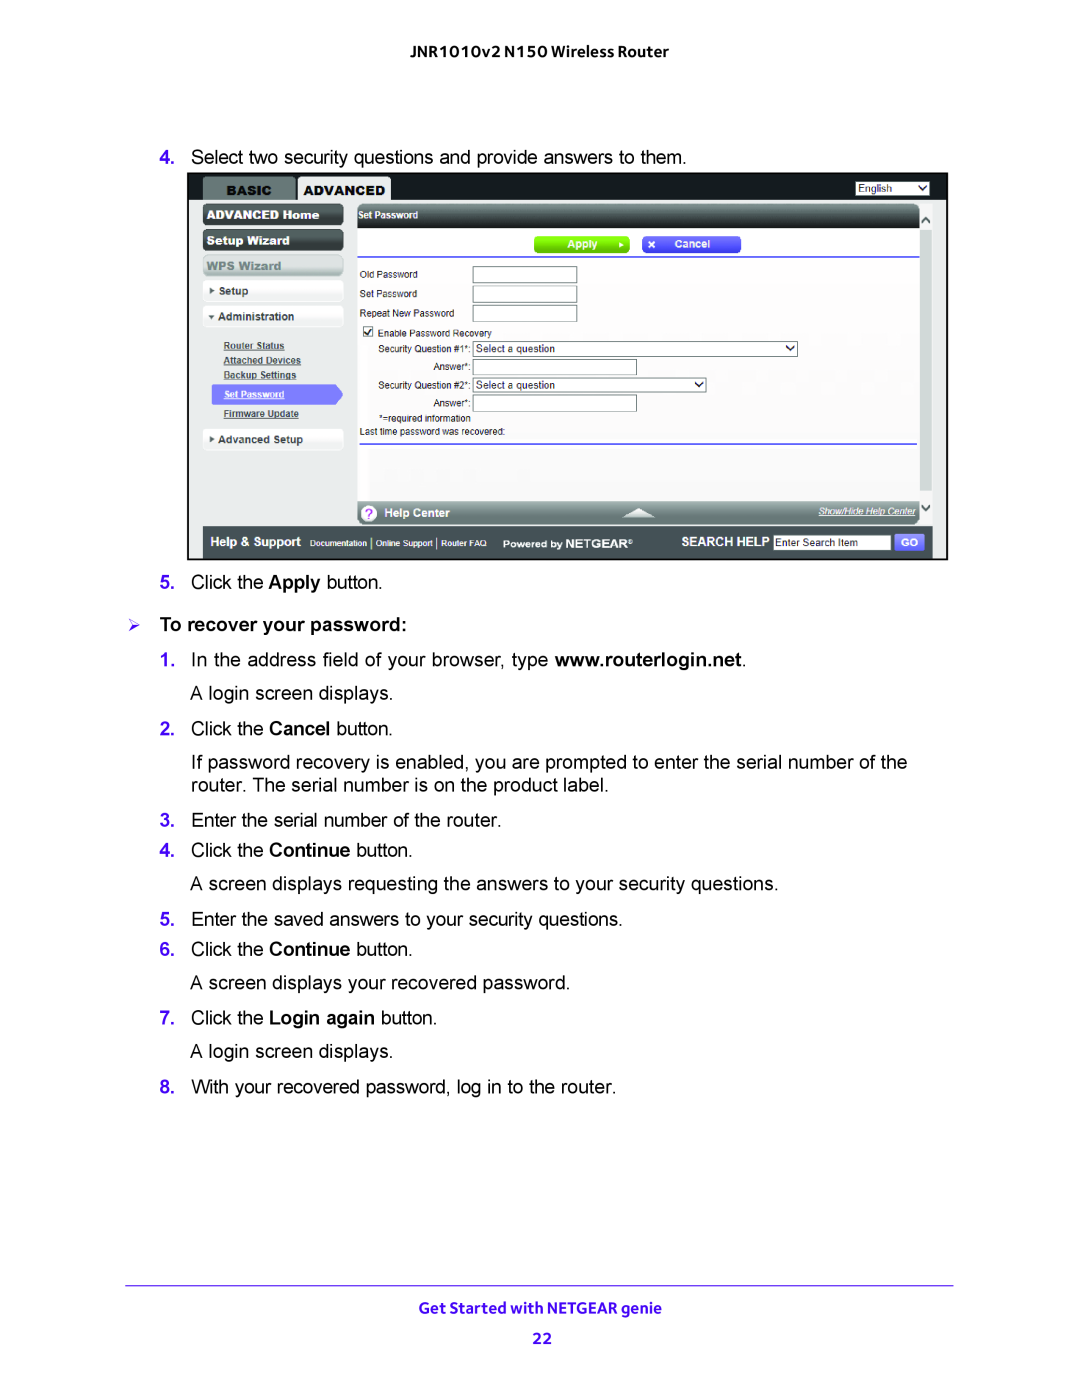 NETGEAR JNR1010V2 user manual  To recover your password 